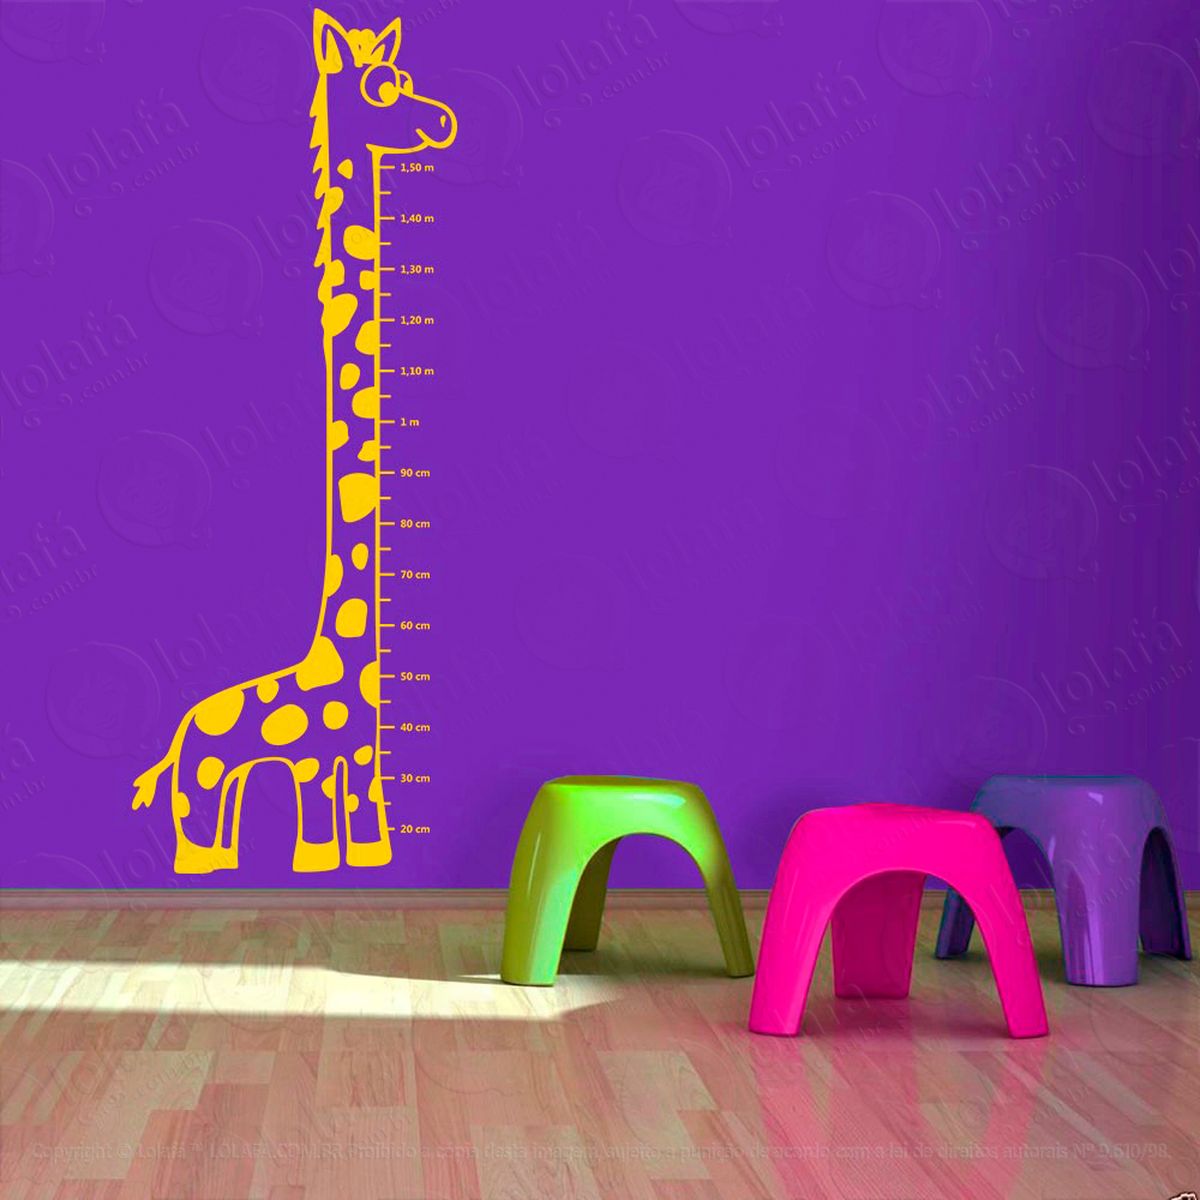 girafa adesivo régua de crescimento infantil, medidor de altura para quarto, porta e parede - mod:89